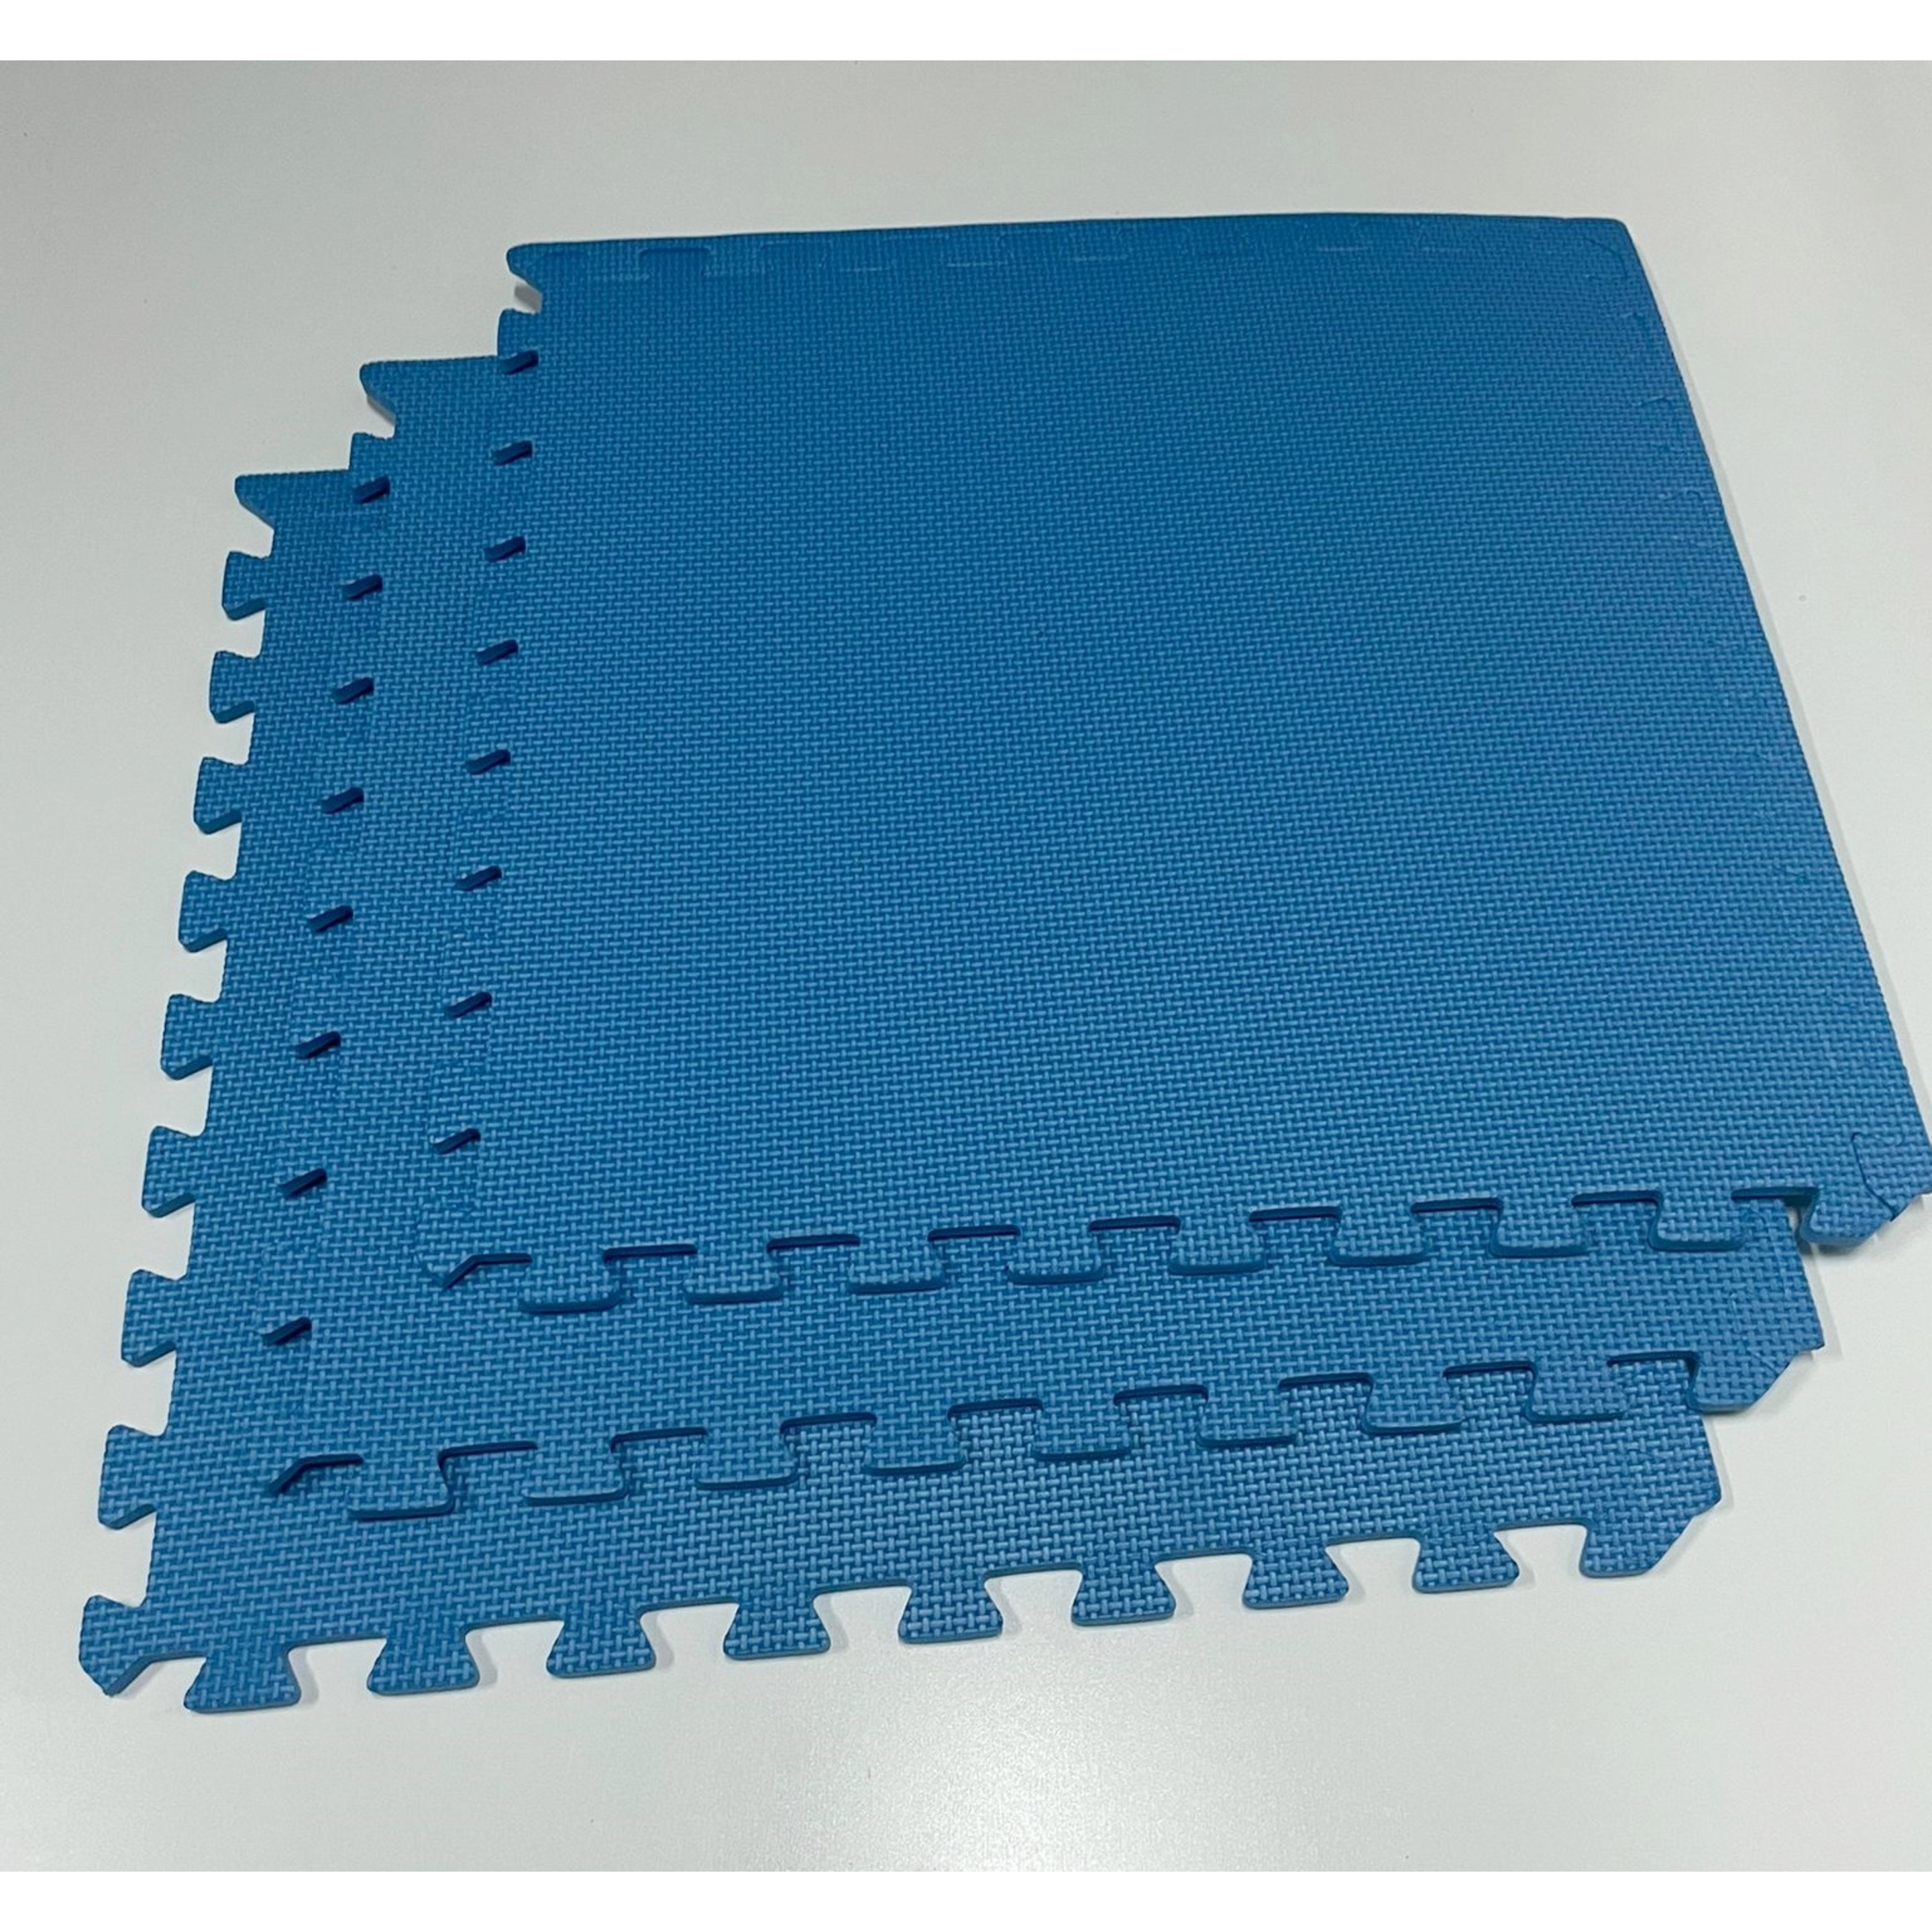 Mugar Suelo Para Niños E Infantiles Tatami Puzzle 60x60x1cm De Goma Eva Puzle, Antideslizante Certif - azul - 